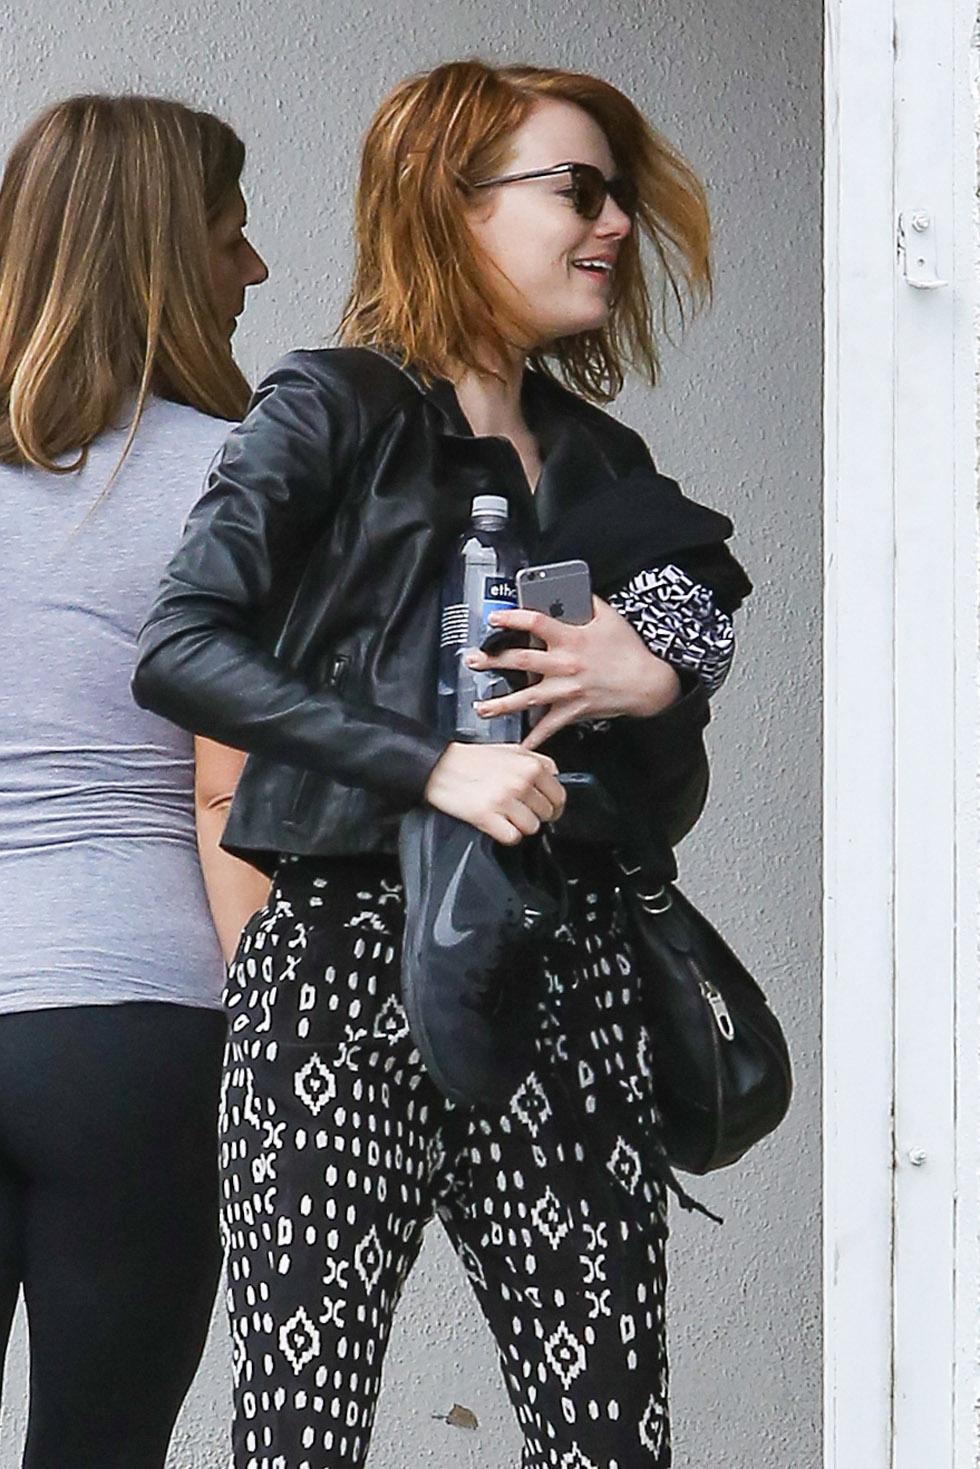 Film Updates on X: Emma Stone on her way to the #MetGala https